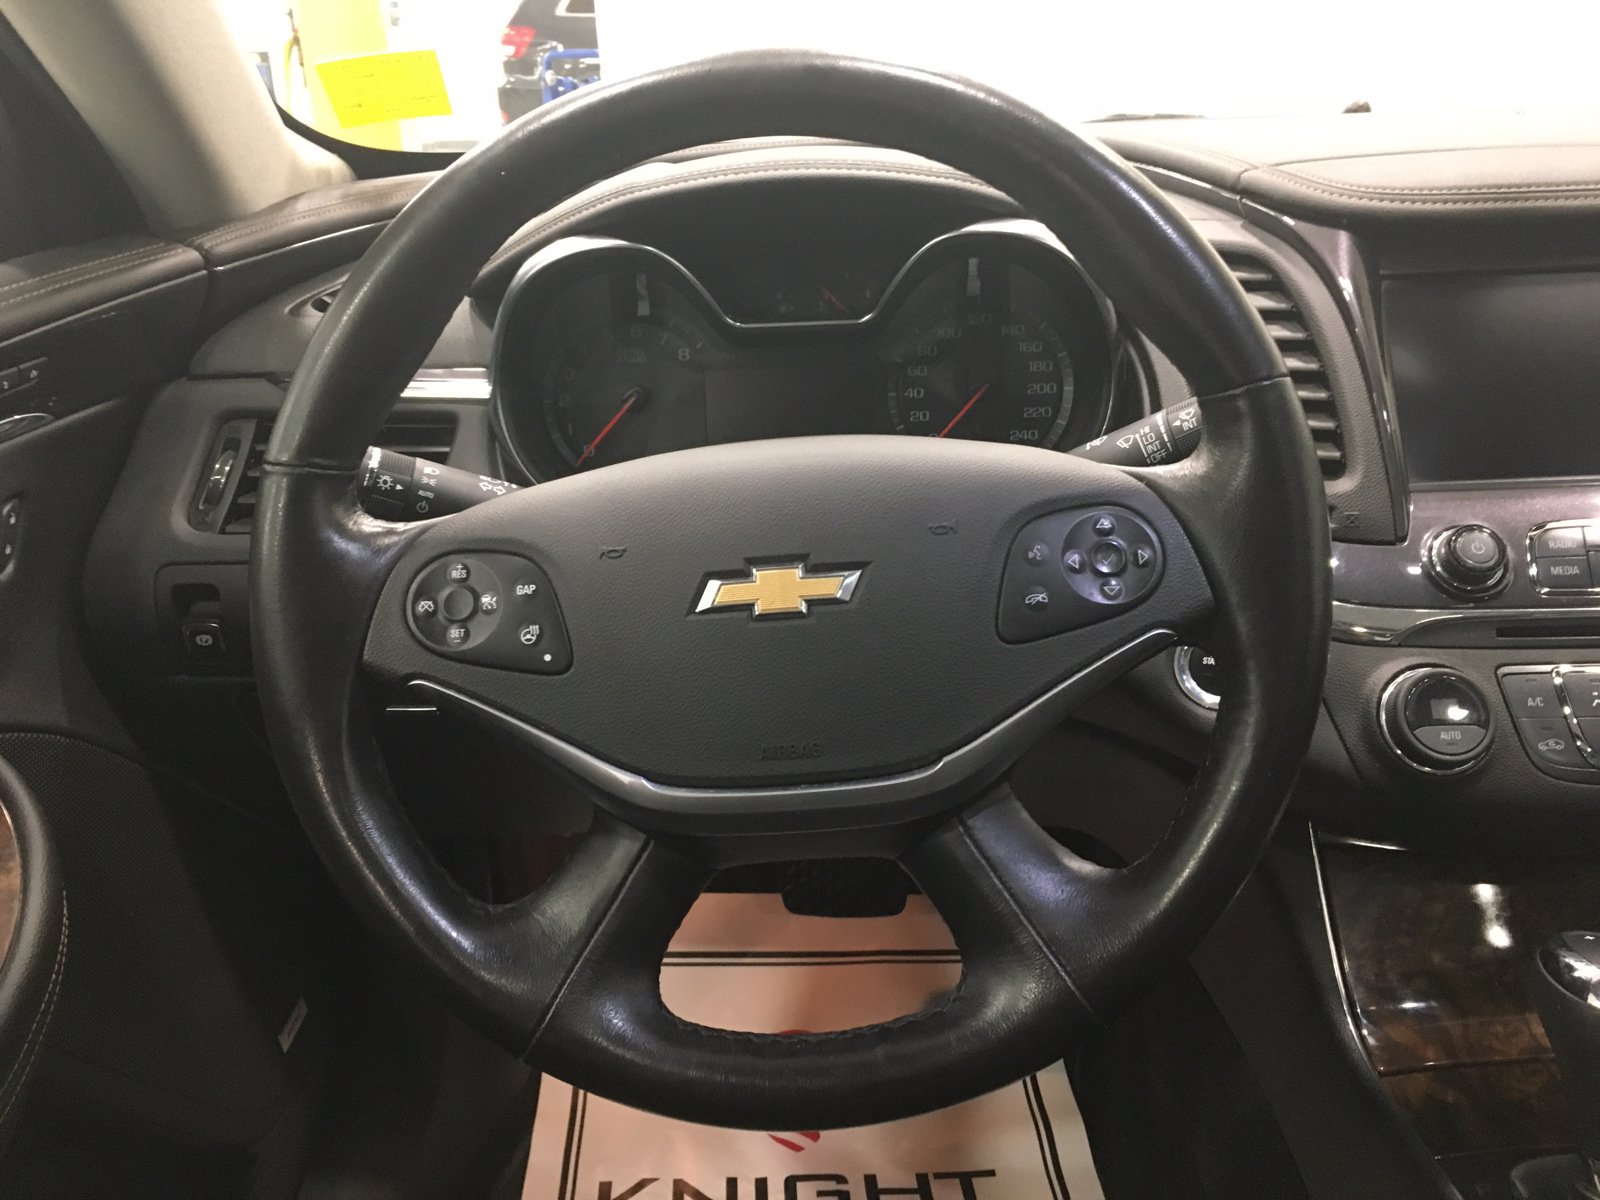 Used 2015 Chevrolet Impala LTZ | Leather | Sunroof | Navigation | 4dr ...